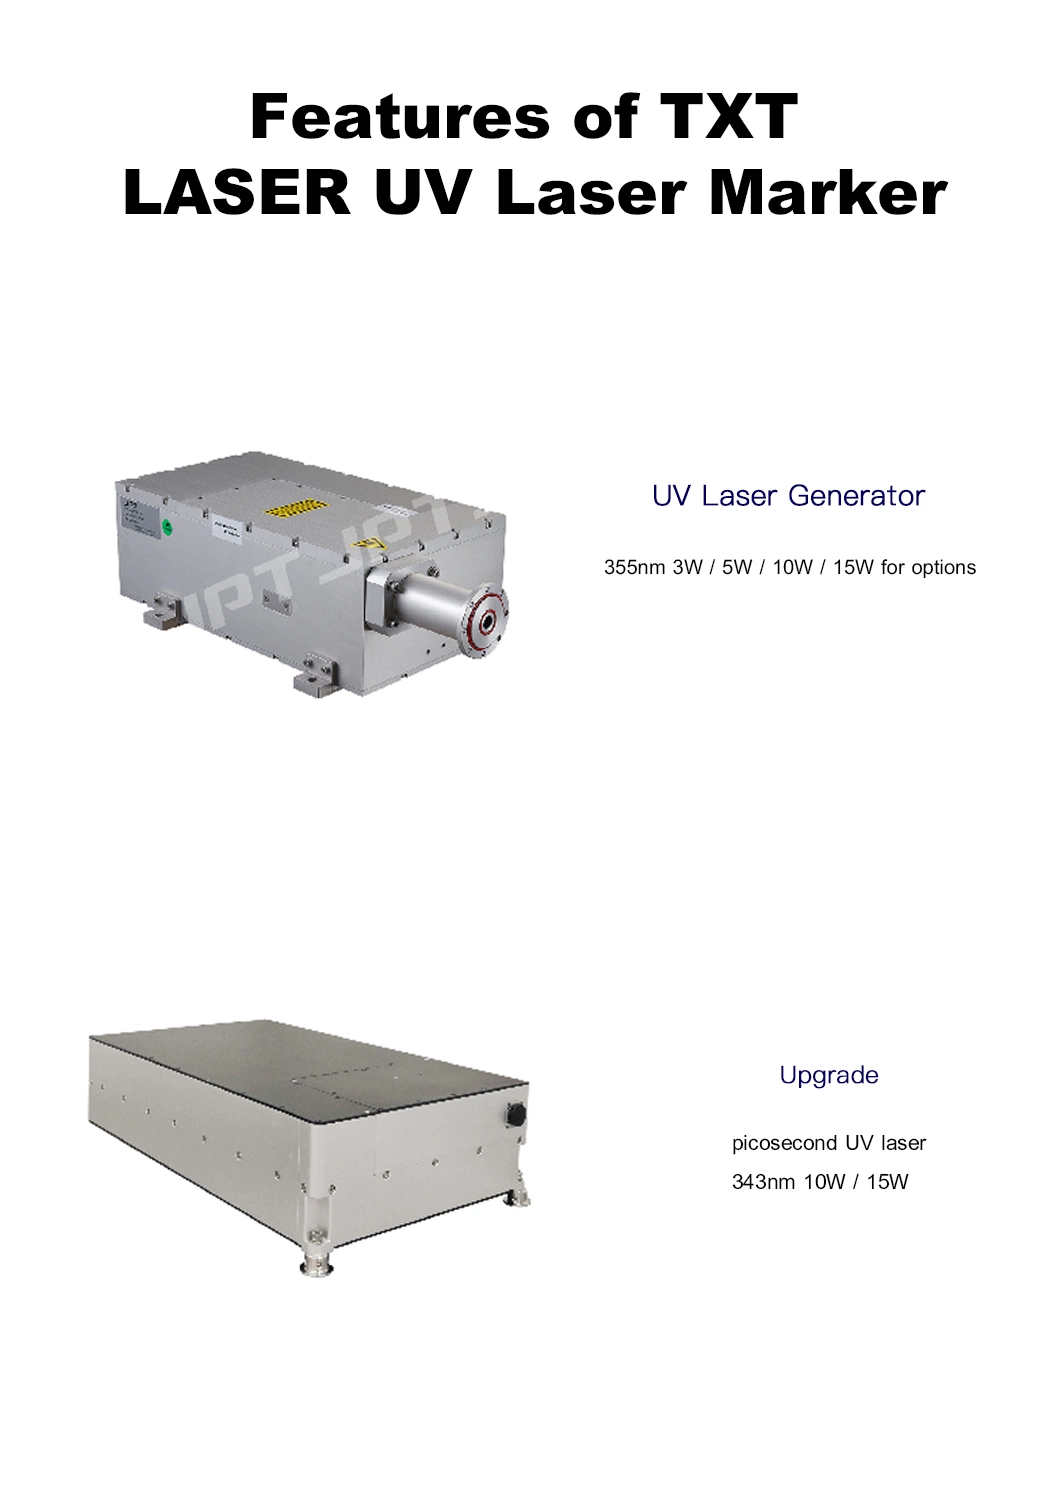 Precision White Plastic /Power Bank/Switch UV Laser Marking Printing Engraving Machine 3W 5W 8W 10W 15W